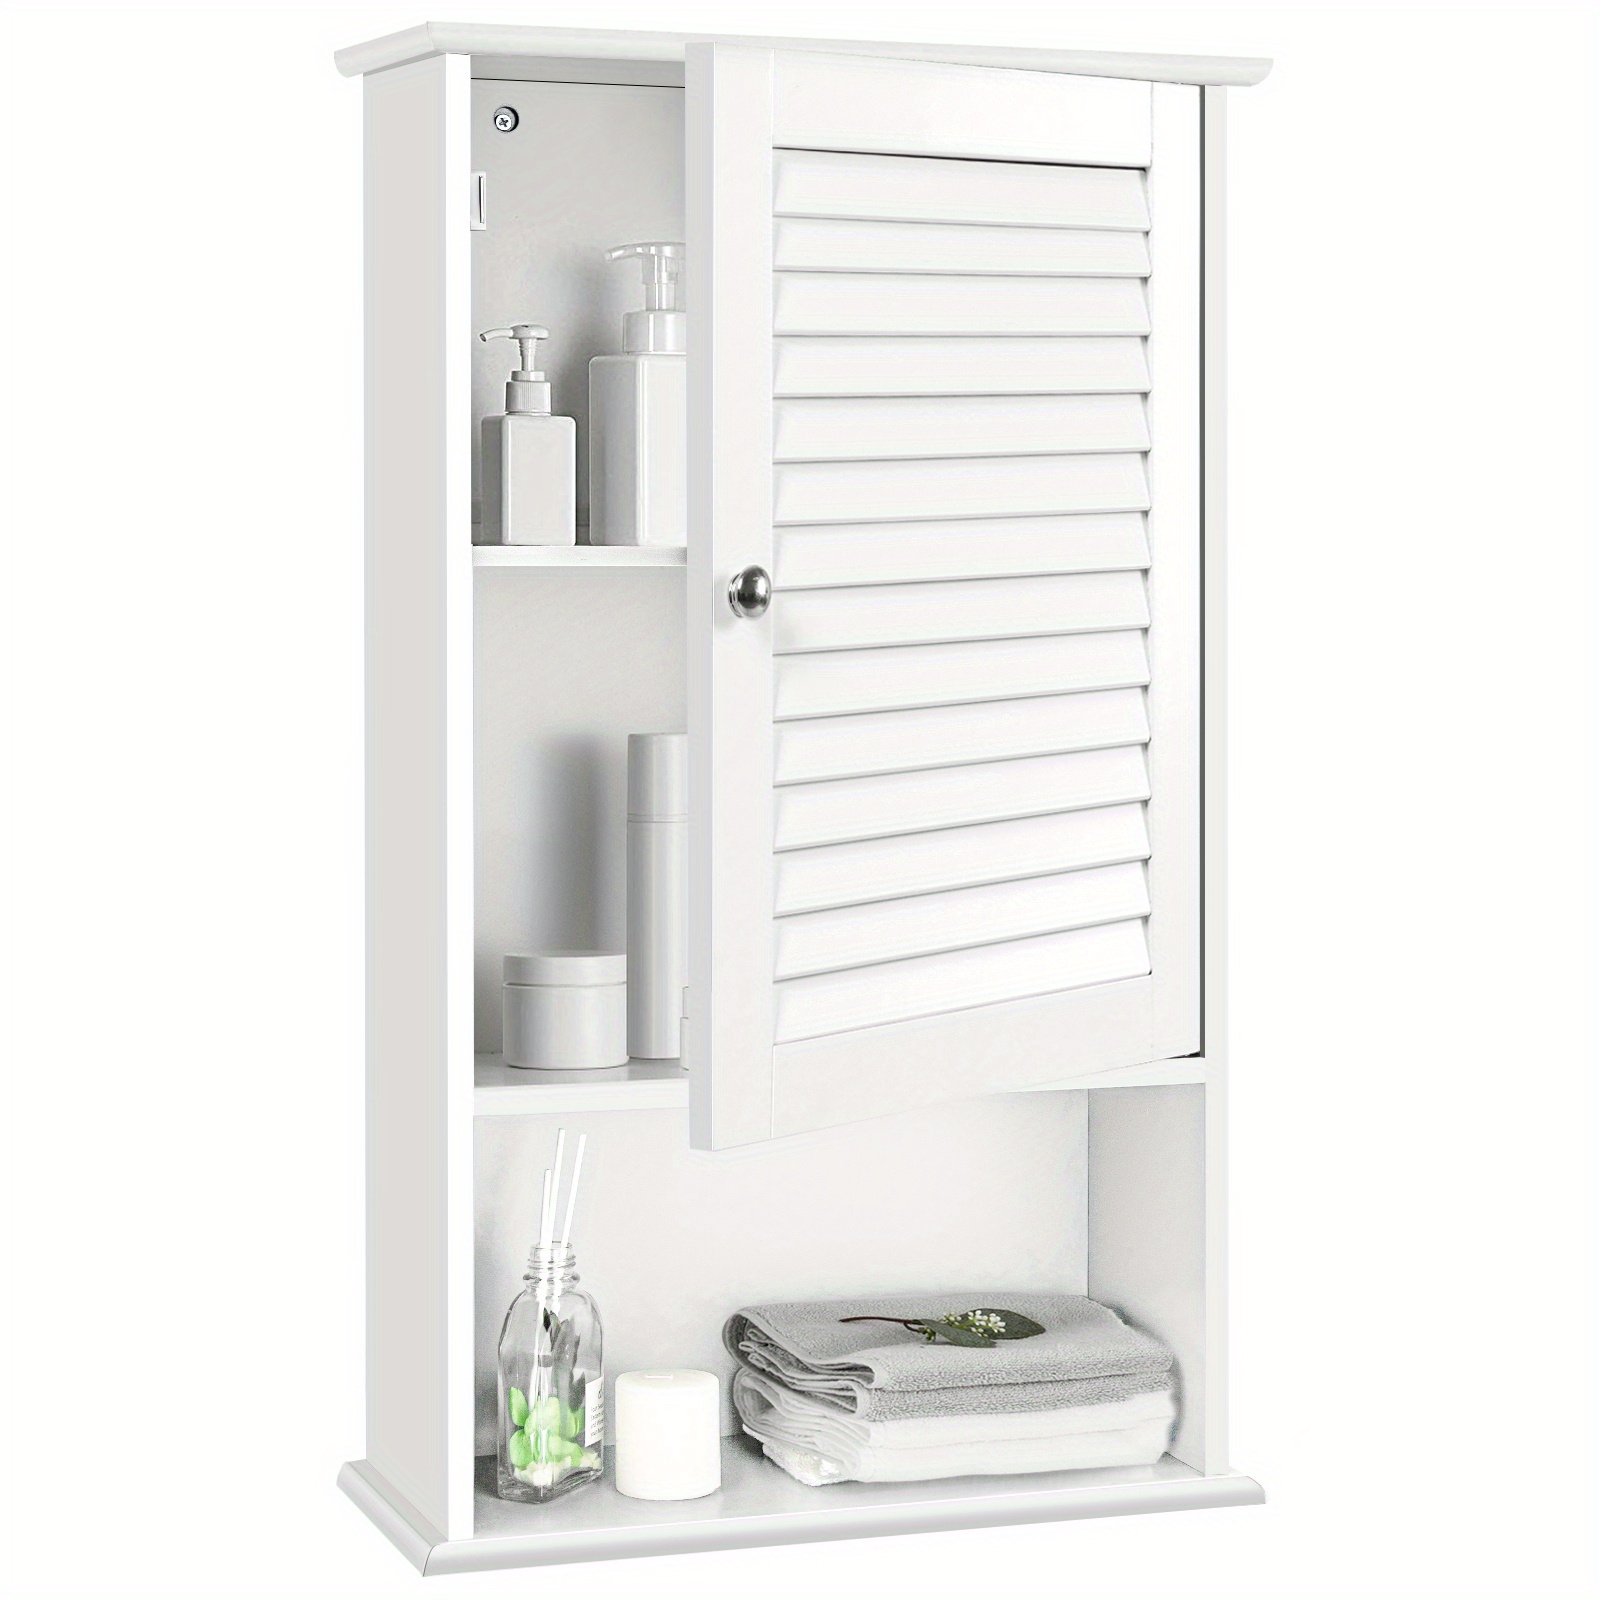 

Giantex Bathroom Wall Mount Storage Cabinet Single Door W/height Adjustable Shelf White